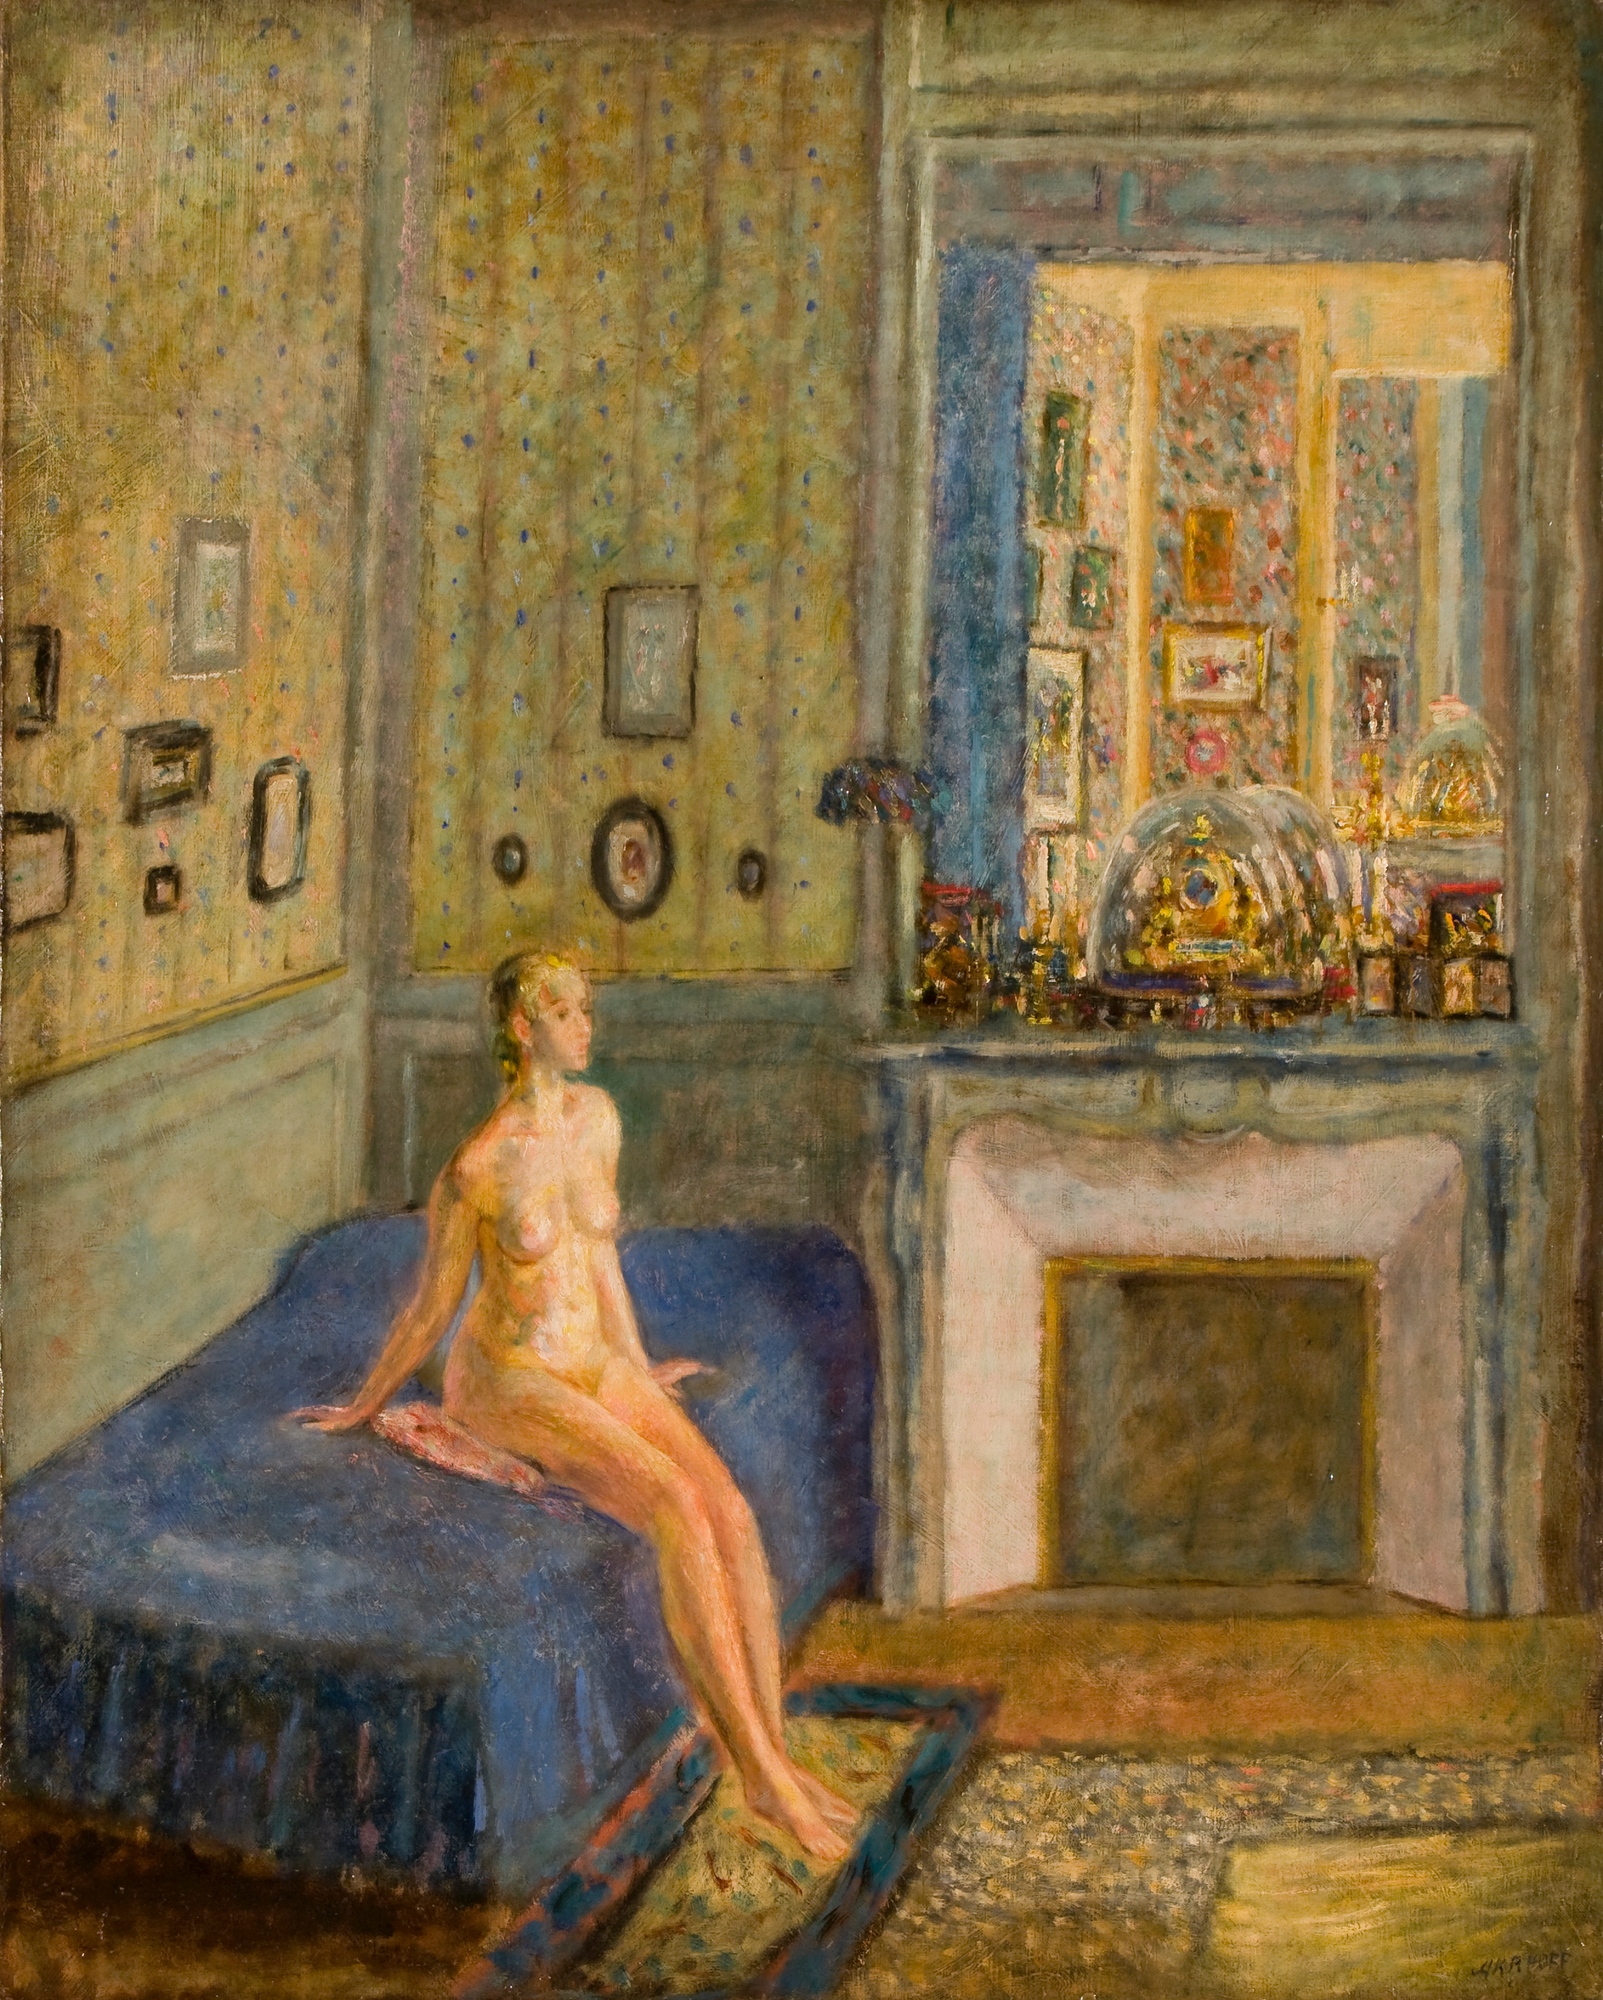 Nude in Blue Room